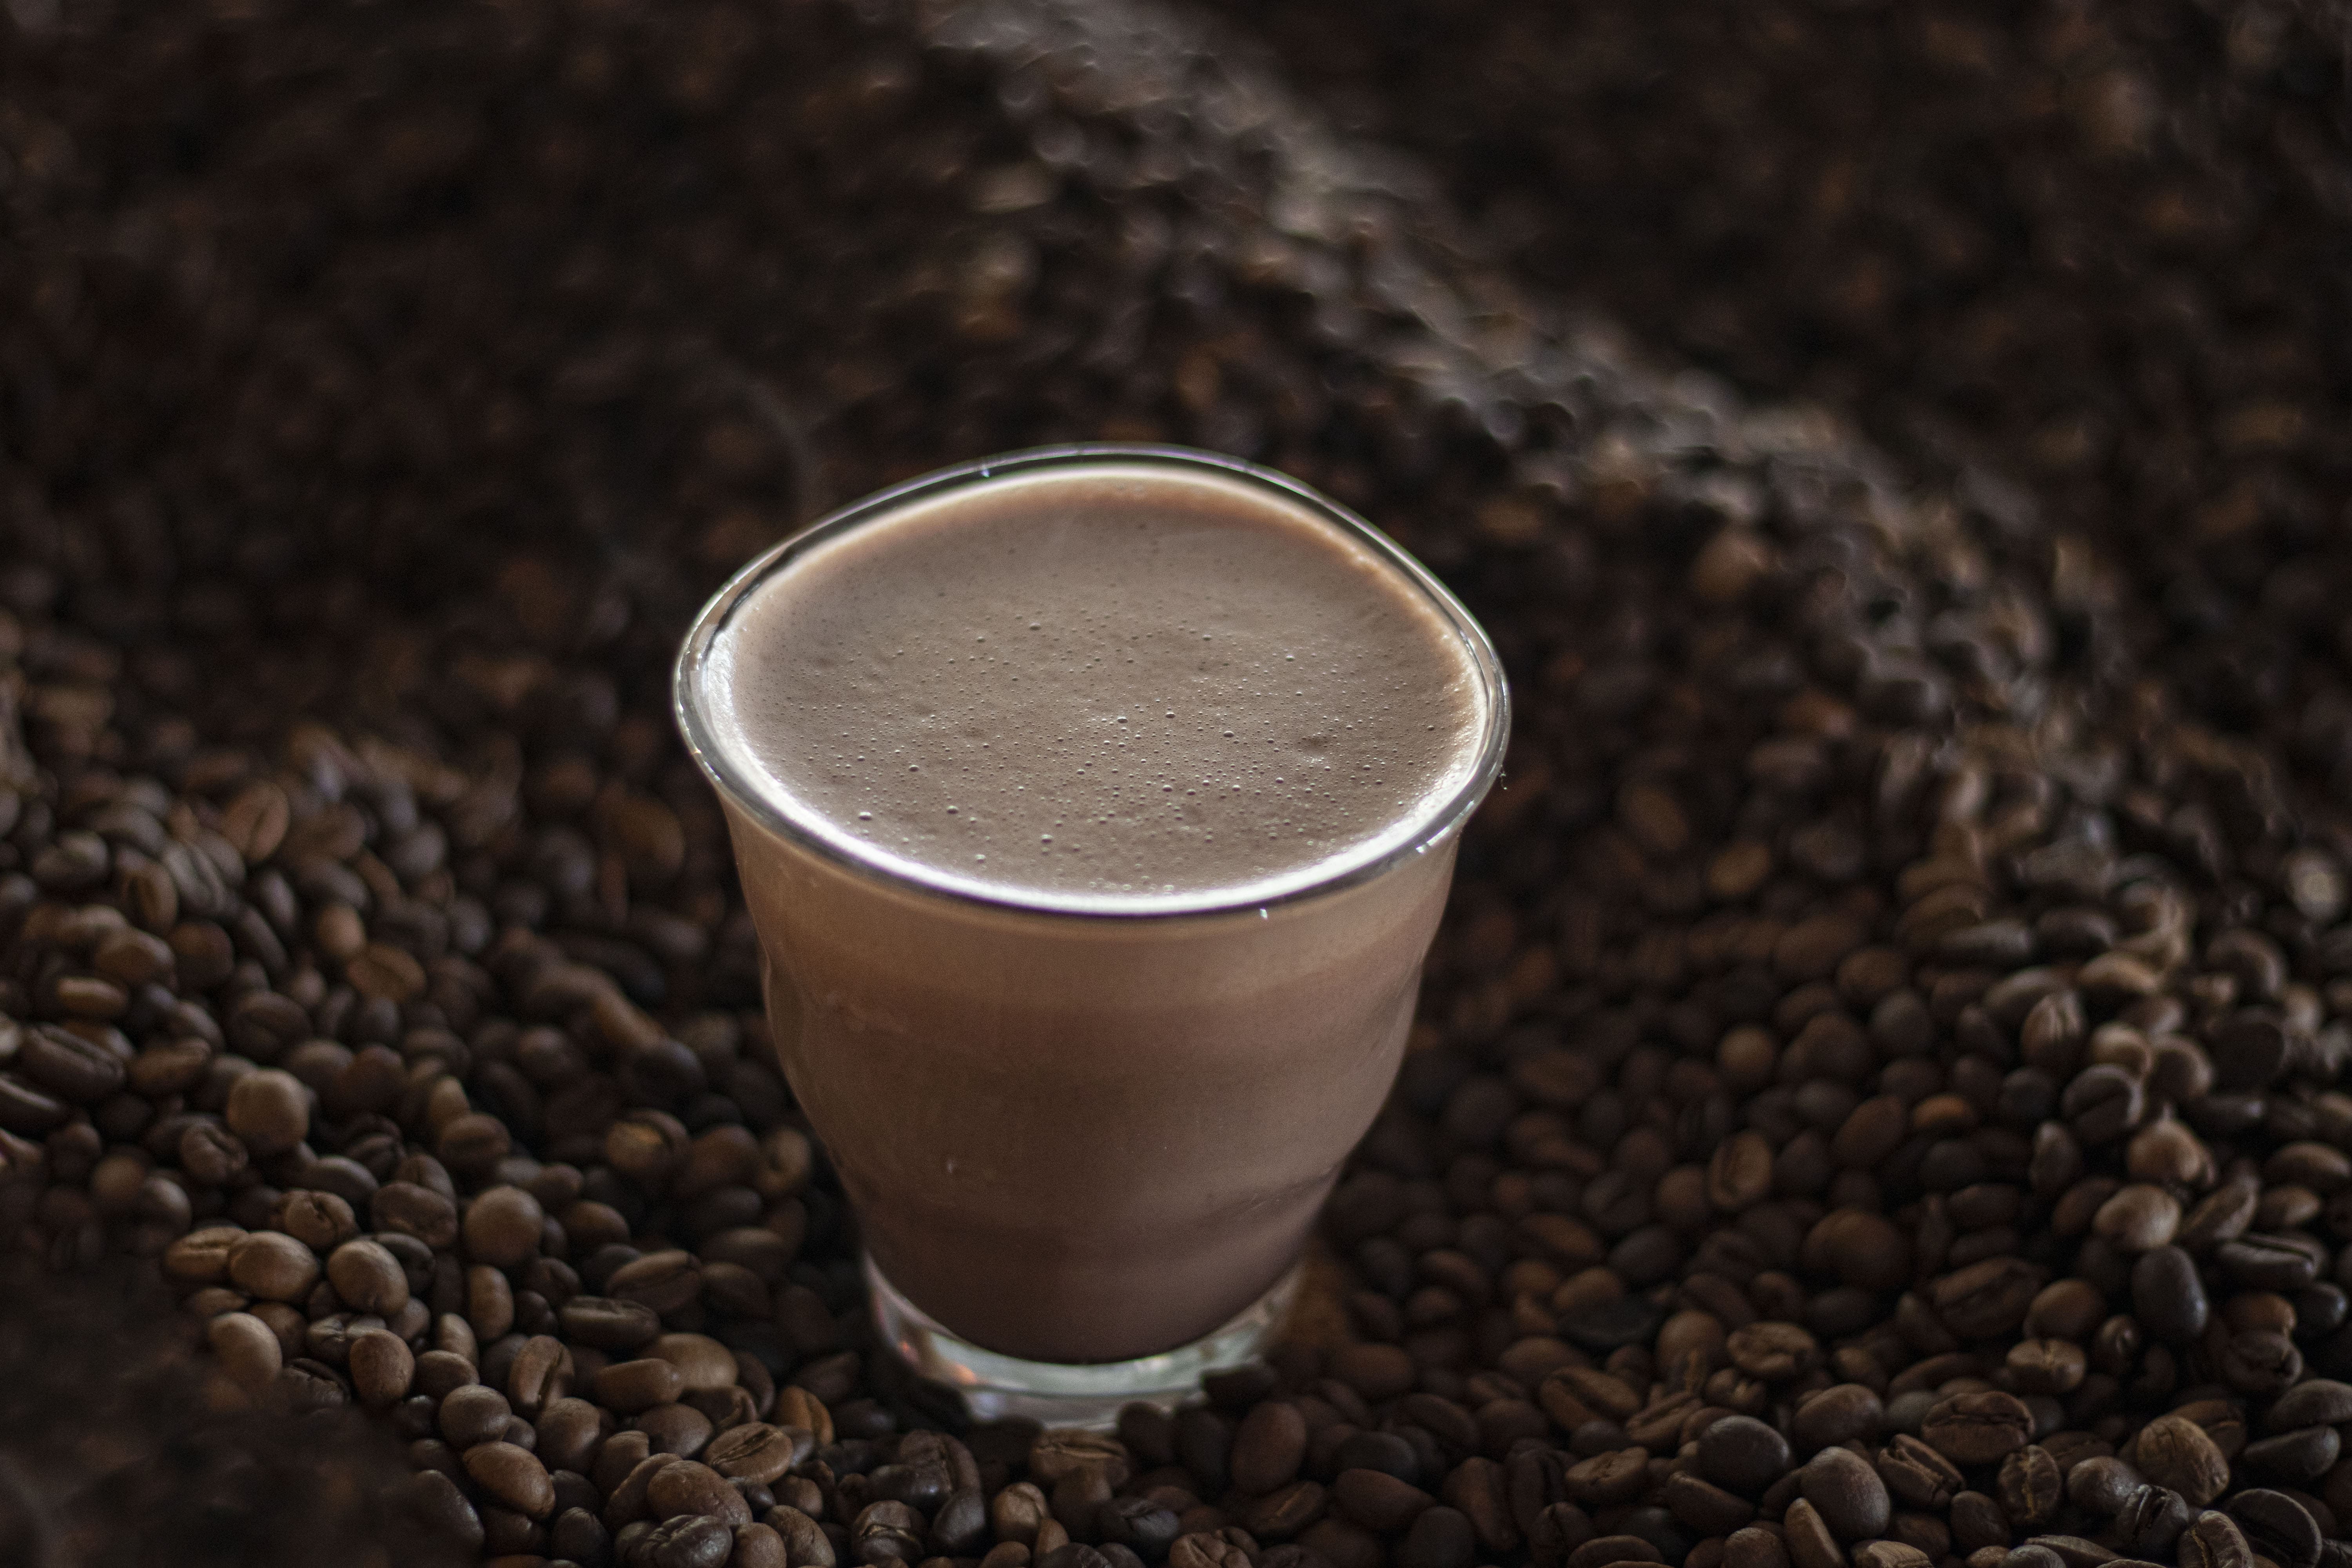 Hot Chocolate|شوكلاته حارة